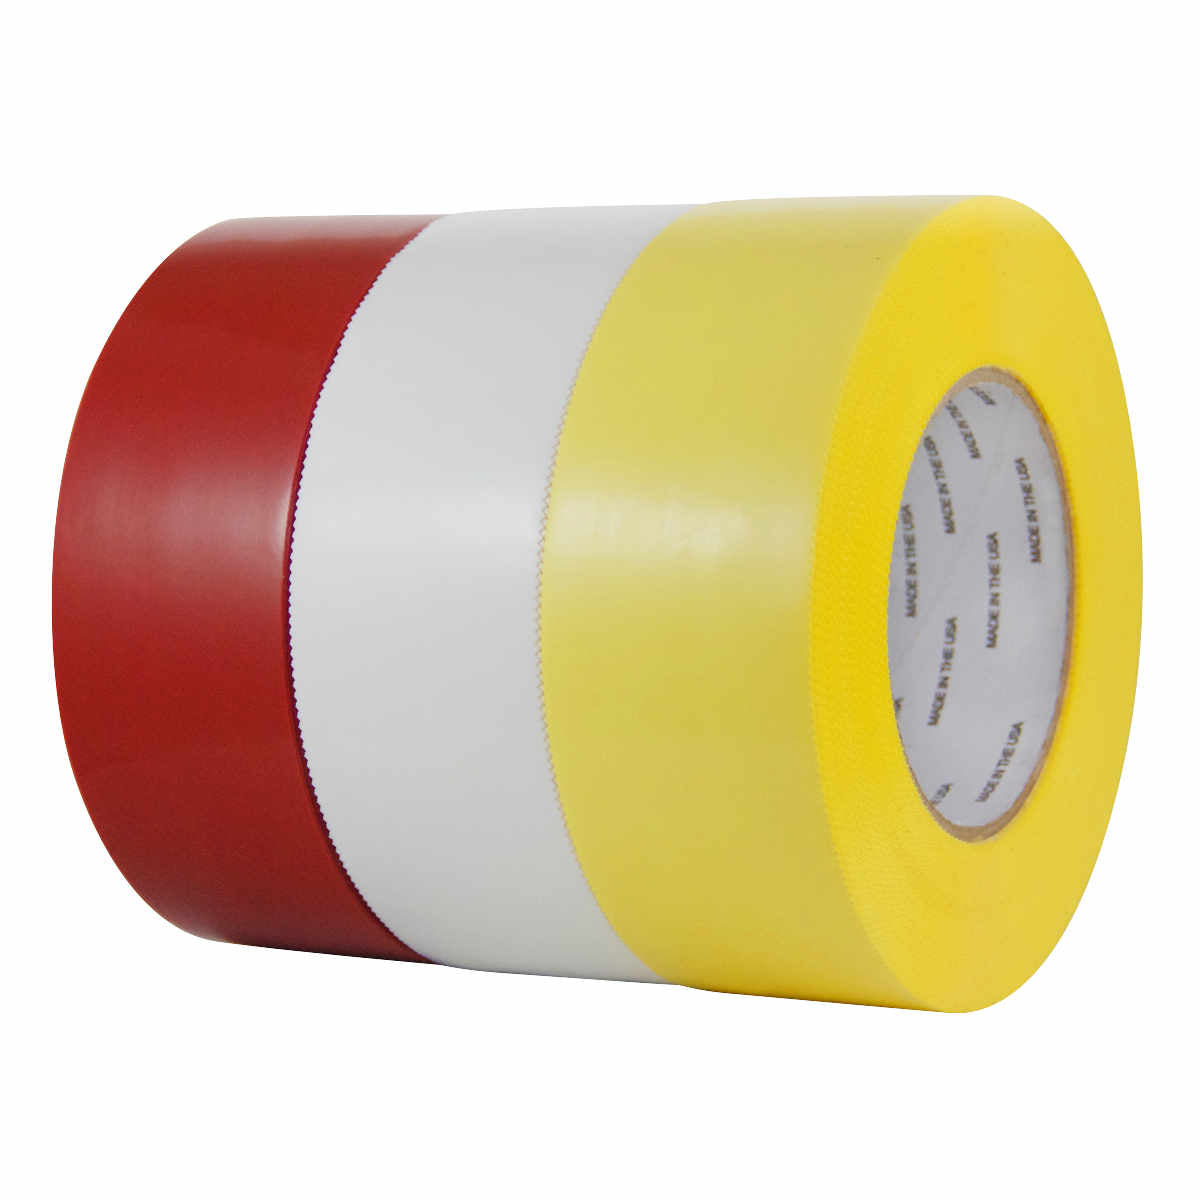 Red Masking Tape - 2 x 60 yds - ULINE - 12 Rolls - S-2491R